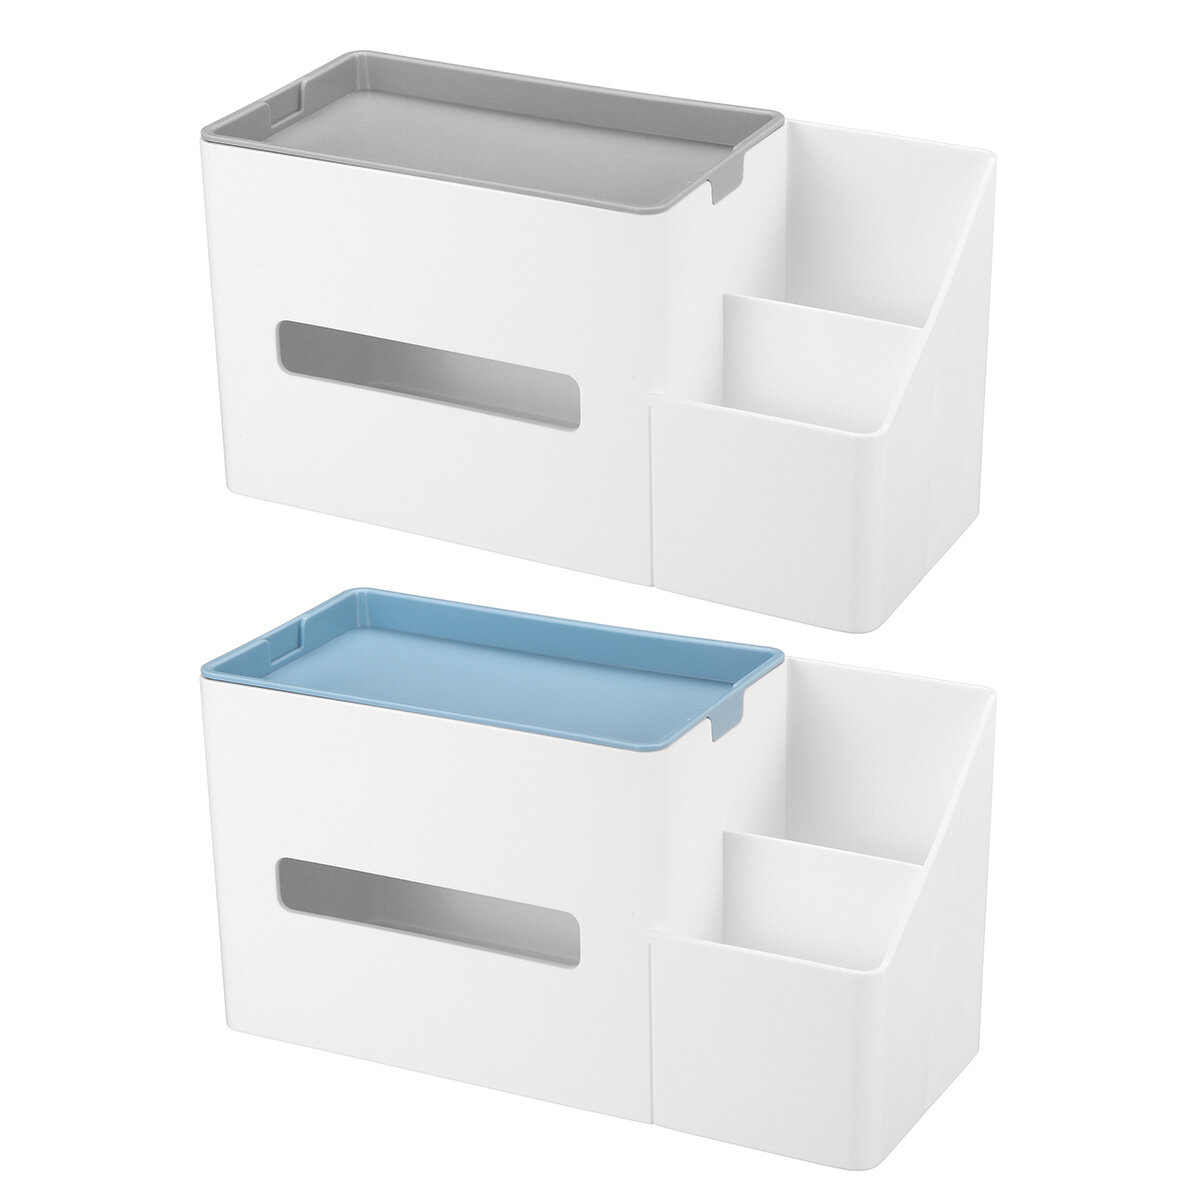 

Plastic Storage Box Home Office Napkins Tea Table Sundries Home Organizer Decorative Desktop Storage Box Supplies